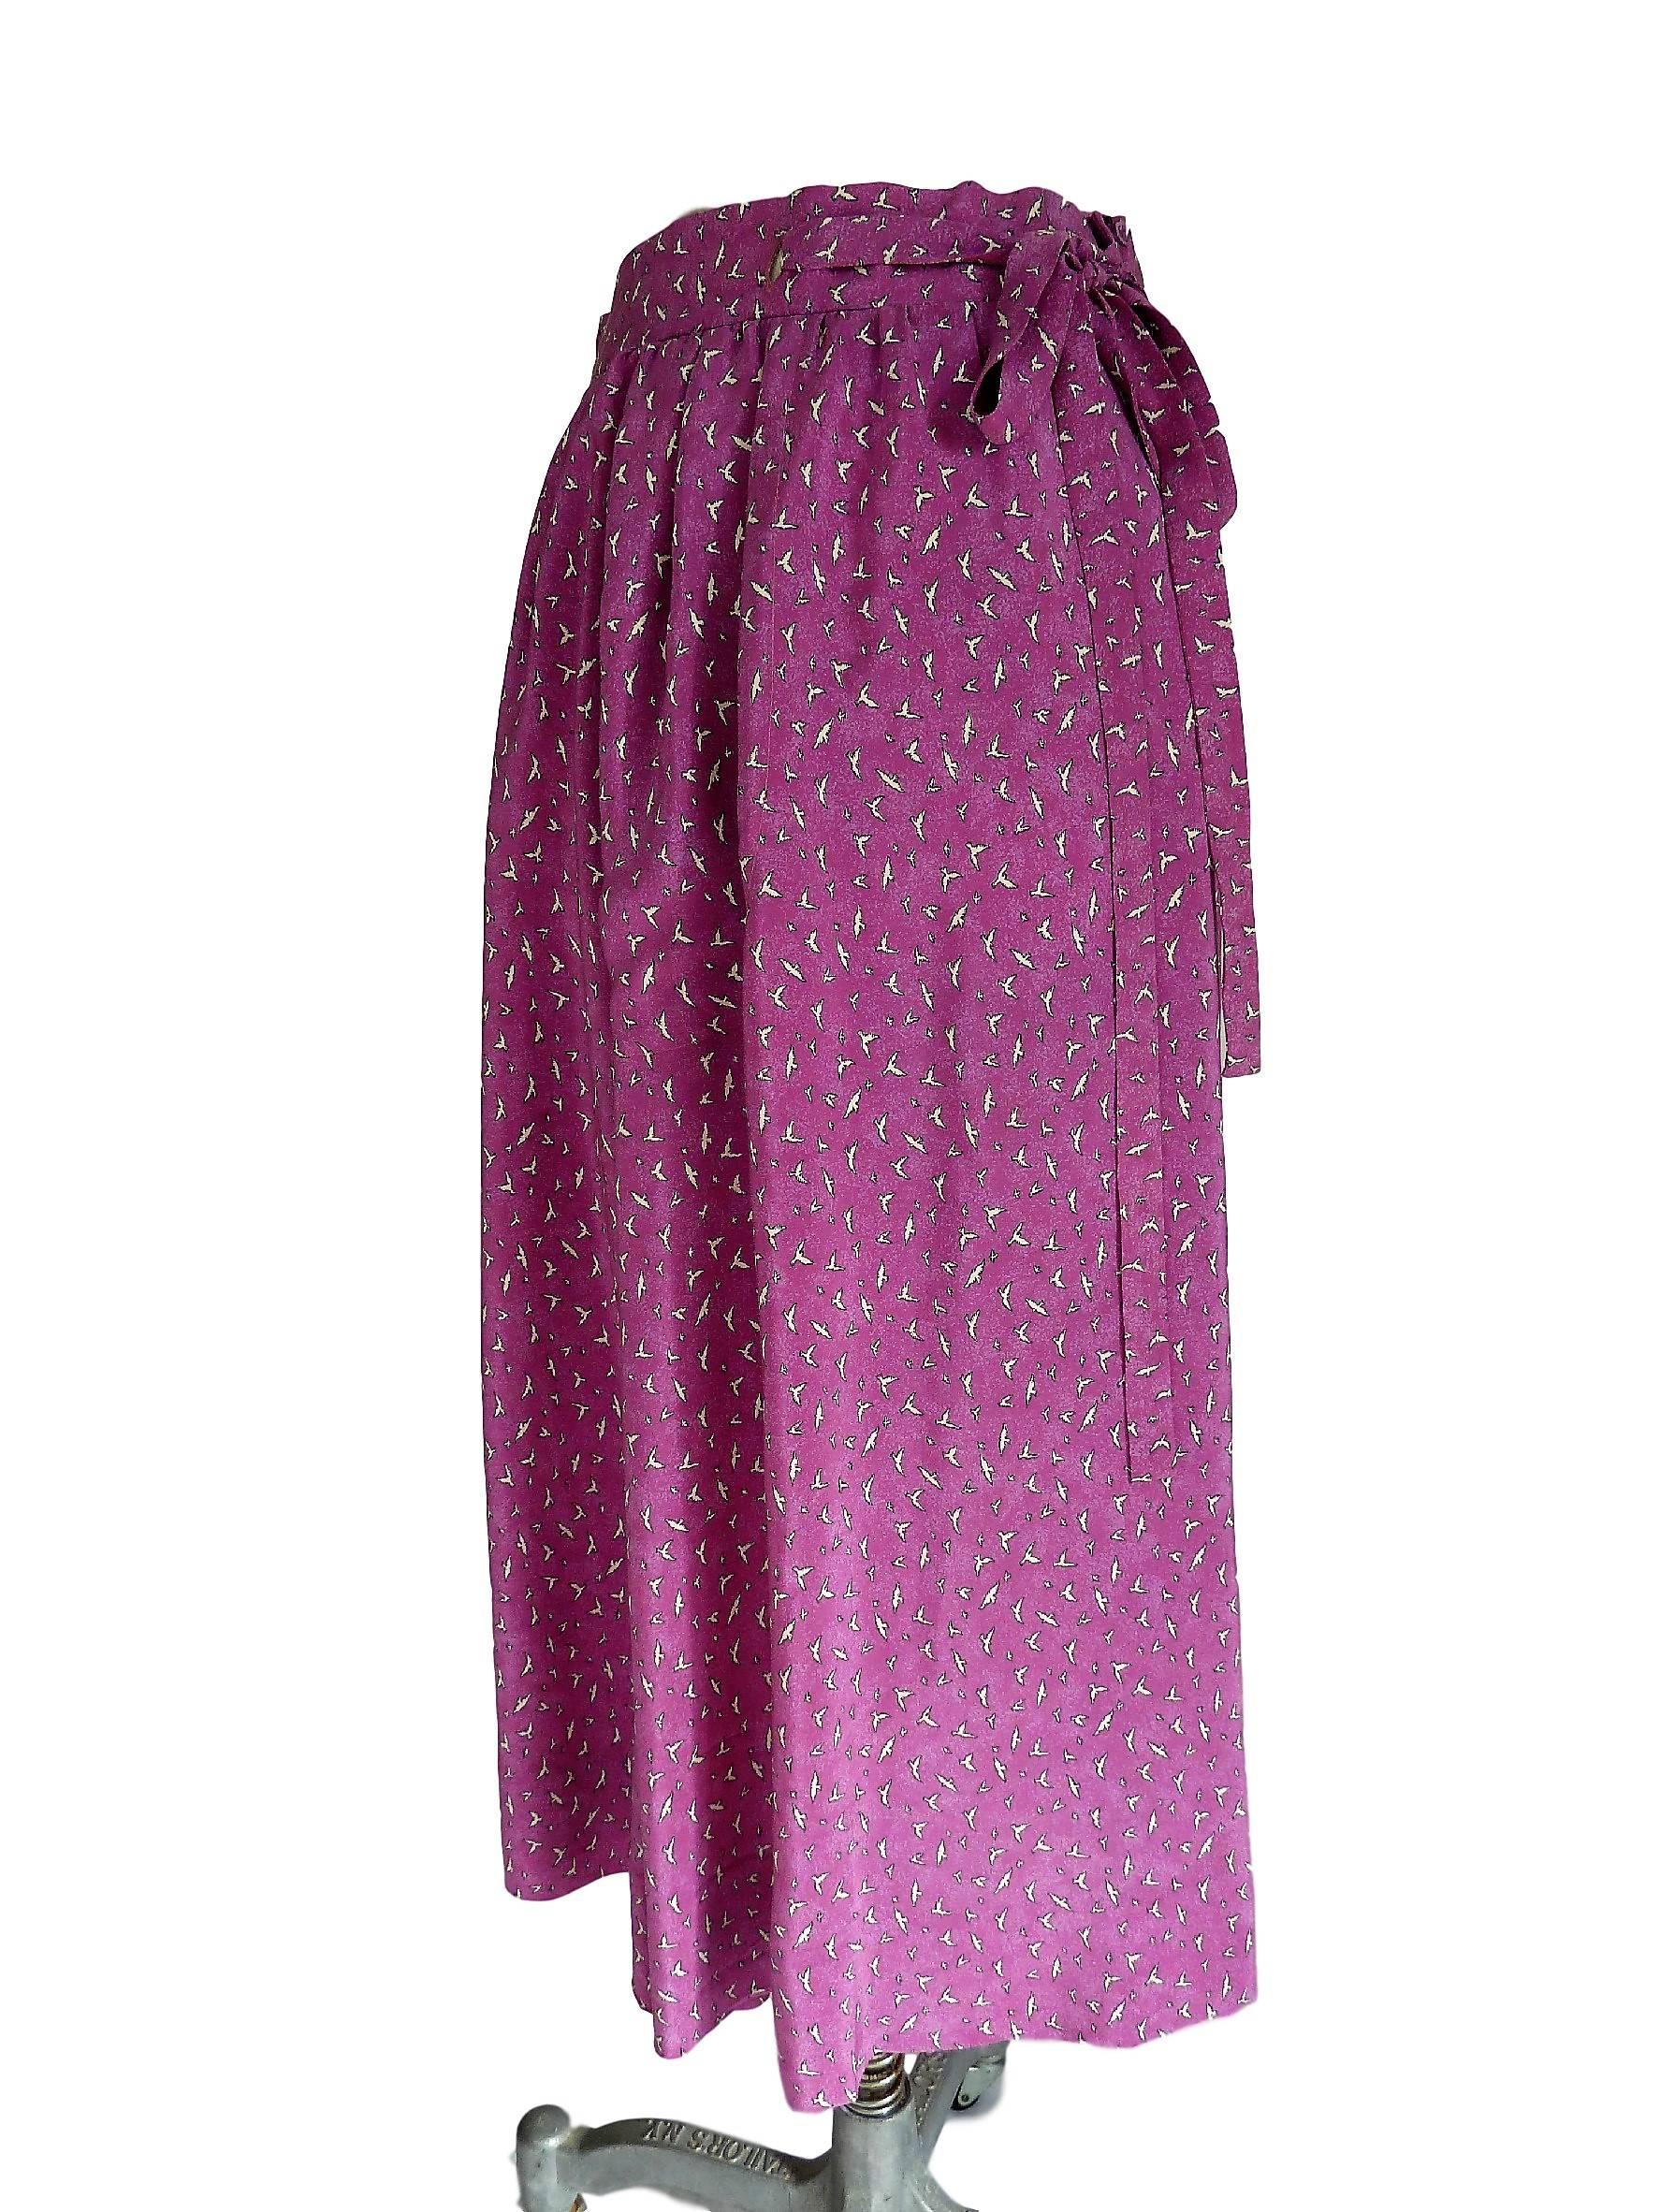 Women's Marina Ferrari 1970s dress set 100% silk jacket blouse and skirt pink size 42 For Sale